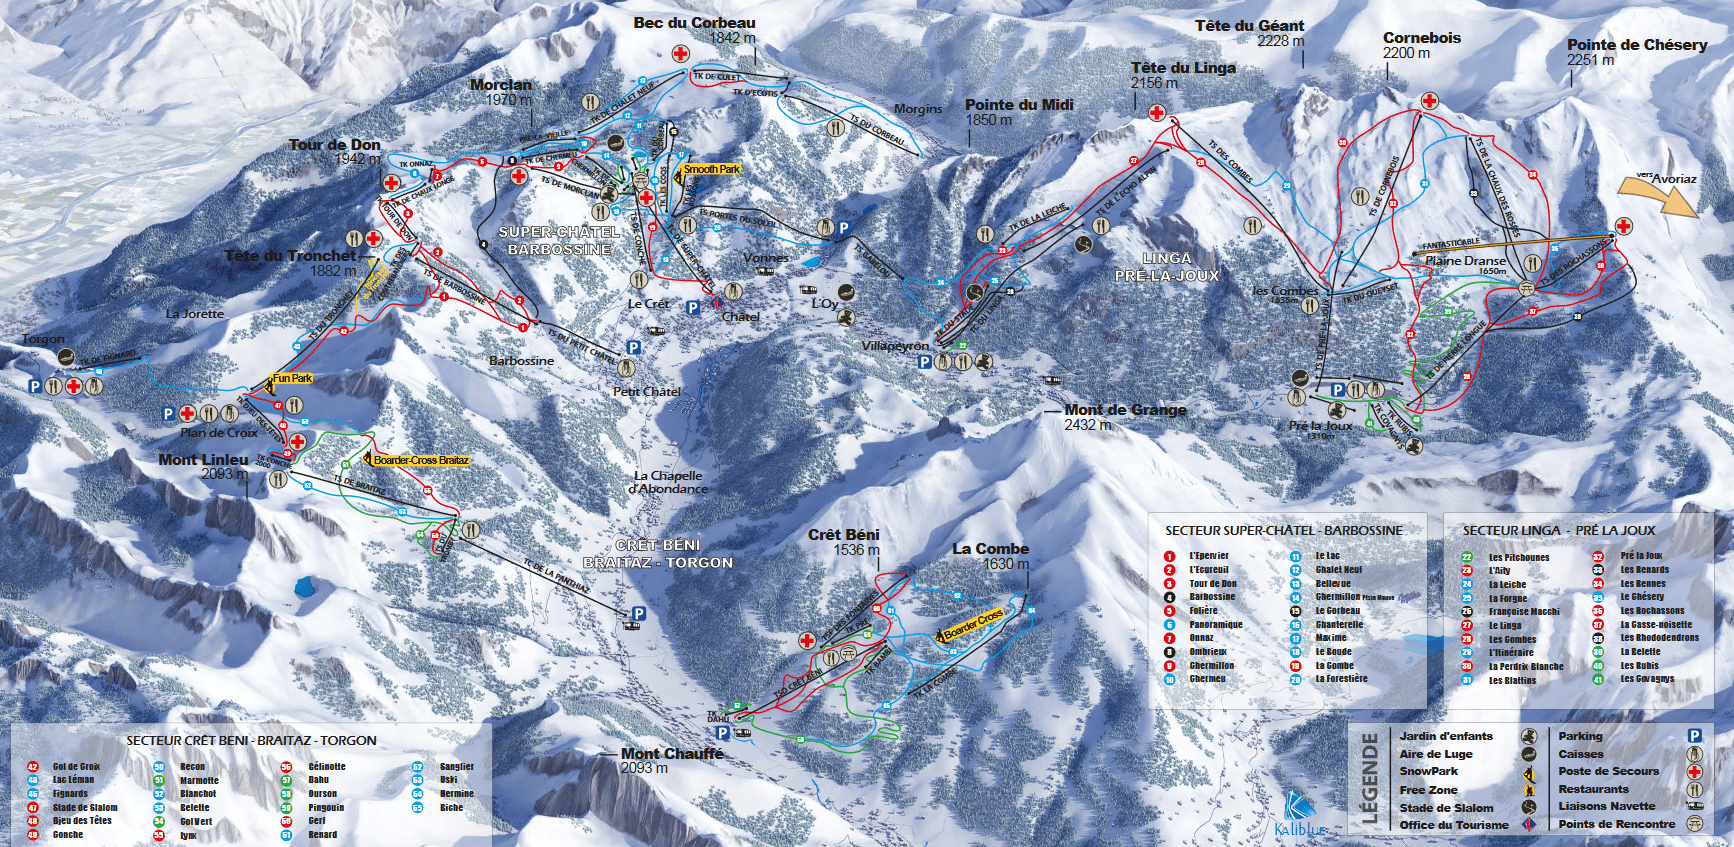 Chatel - trail map